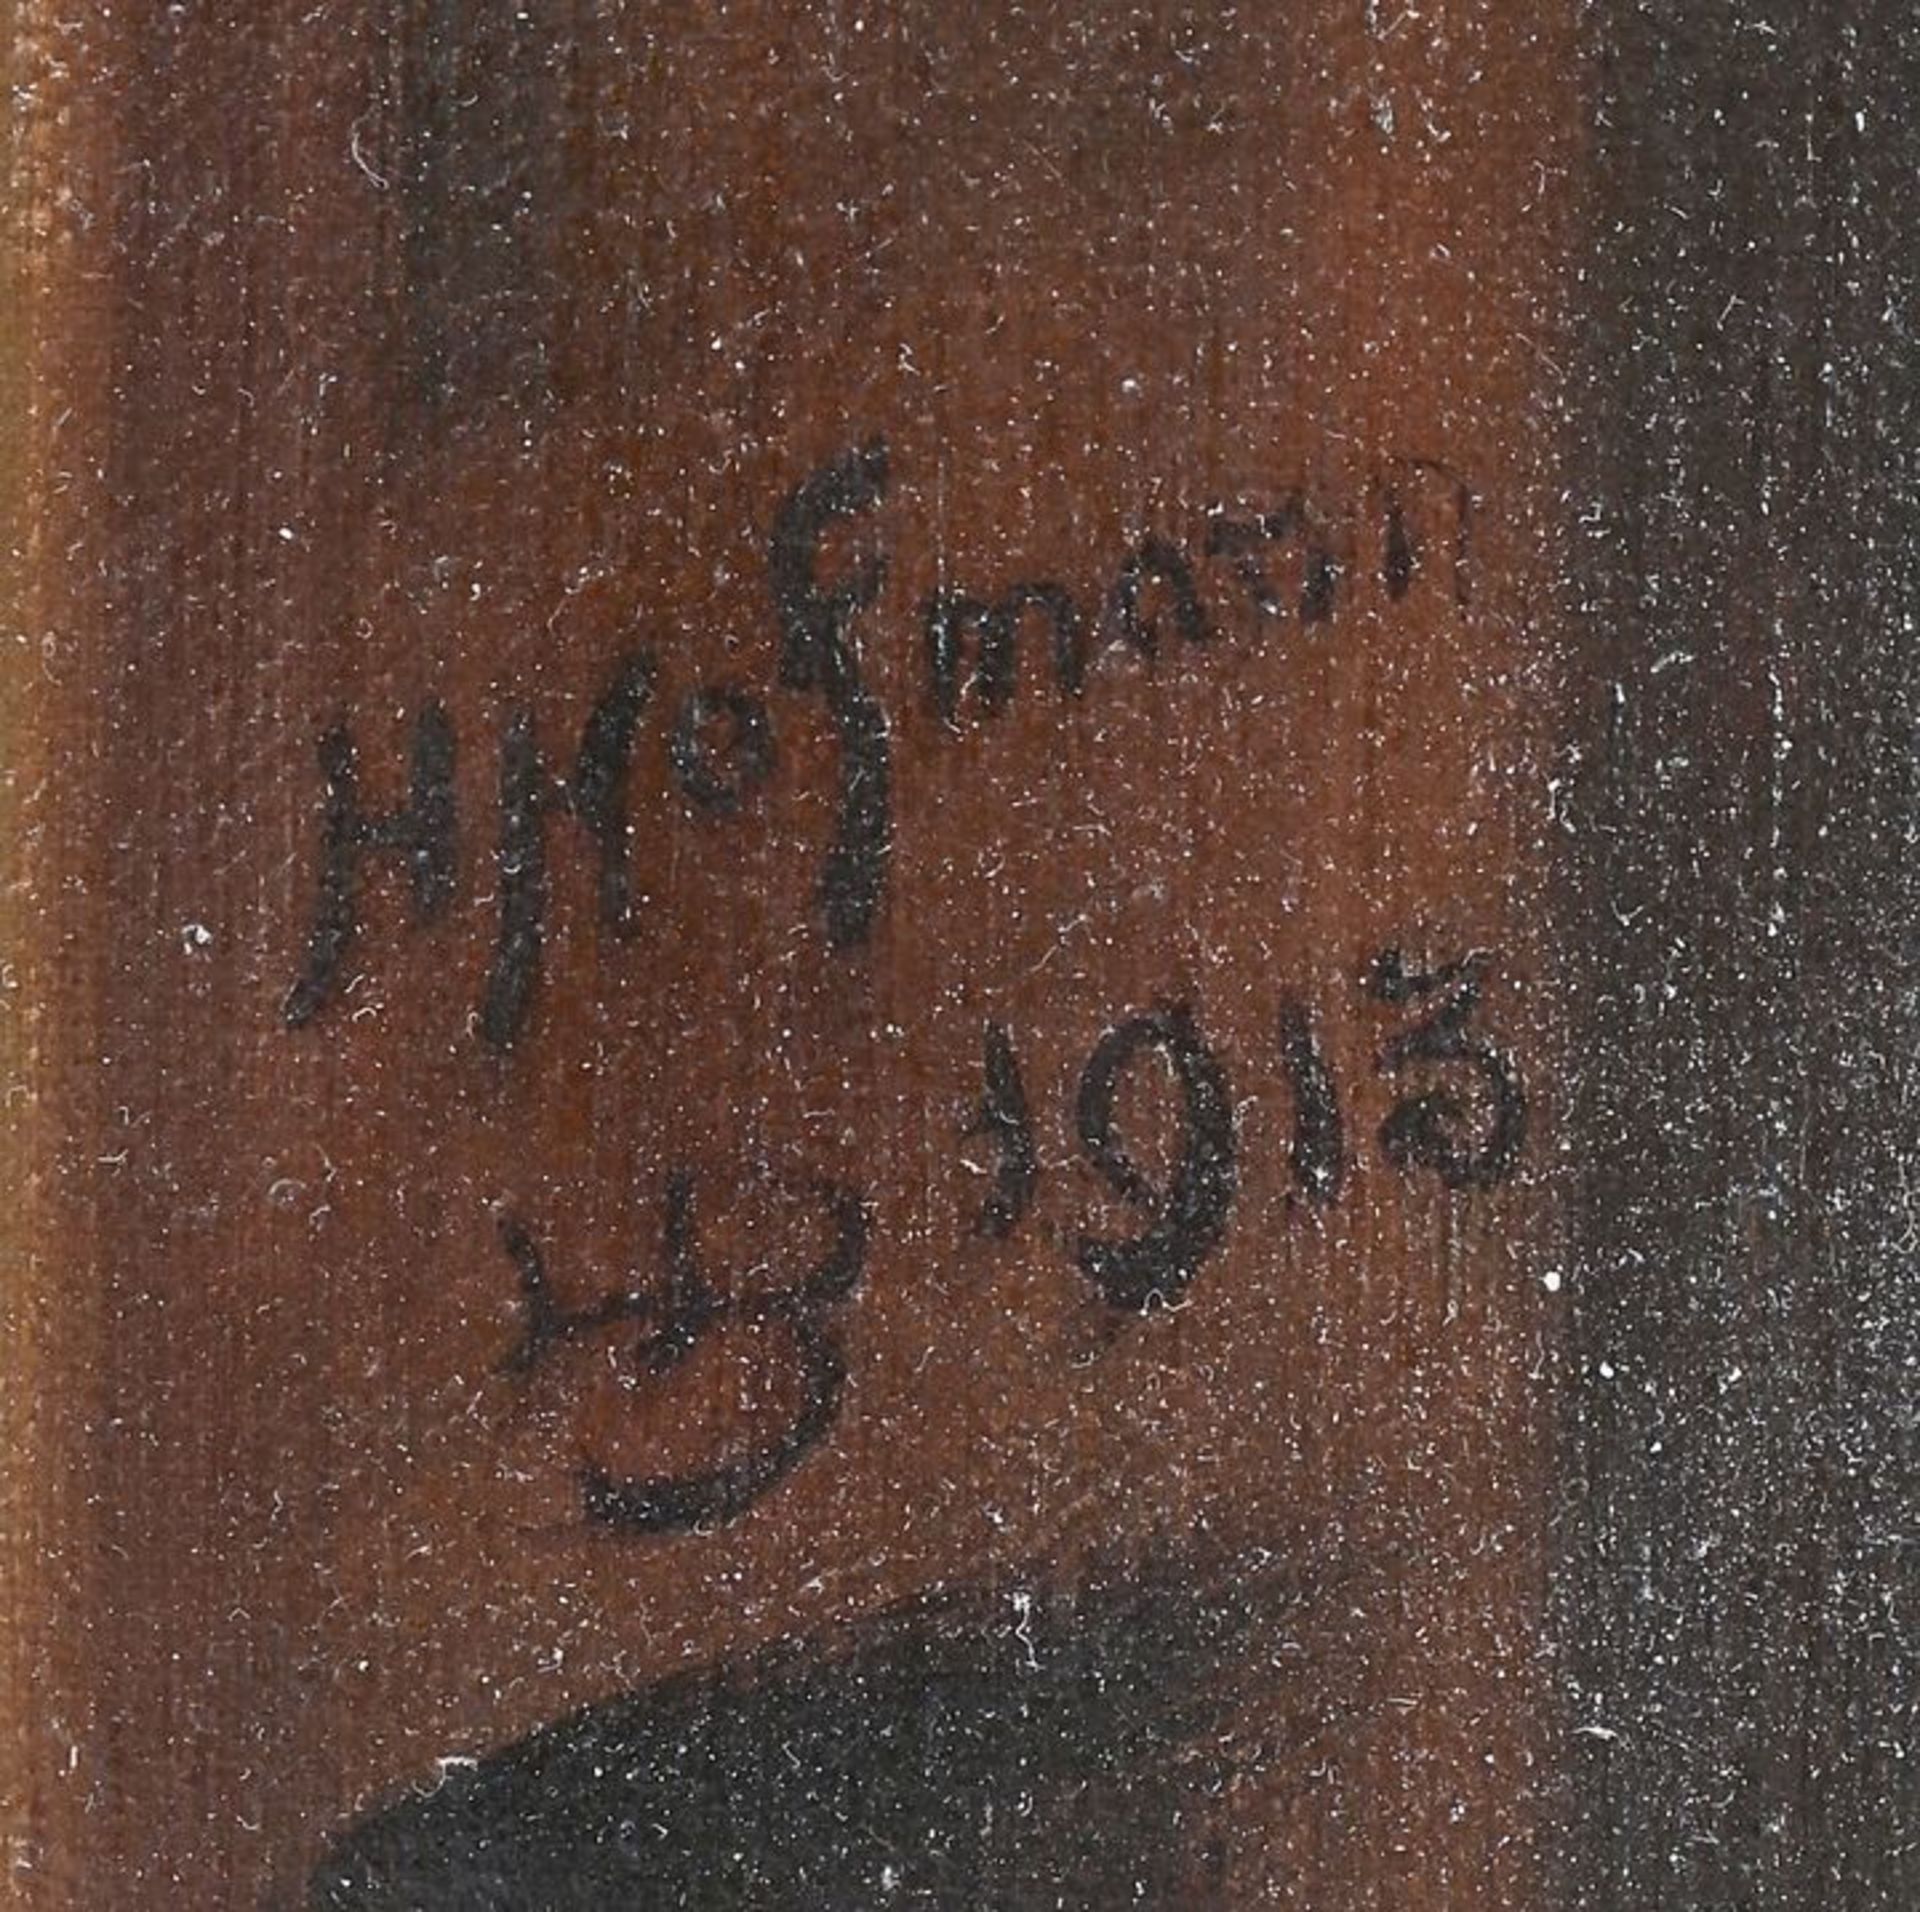 Hofmann Kopie / Hofmann, Copy - Image 3 of 5